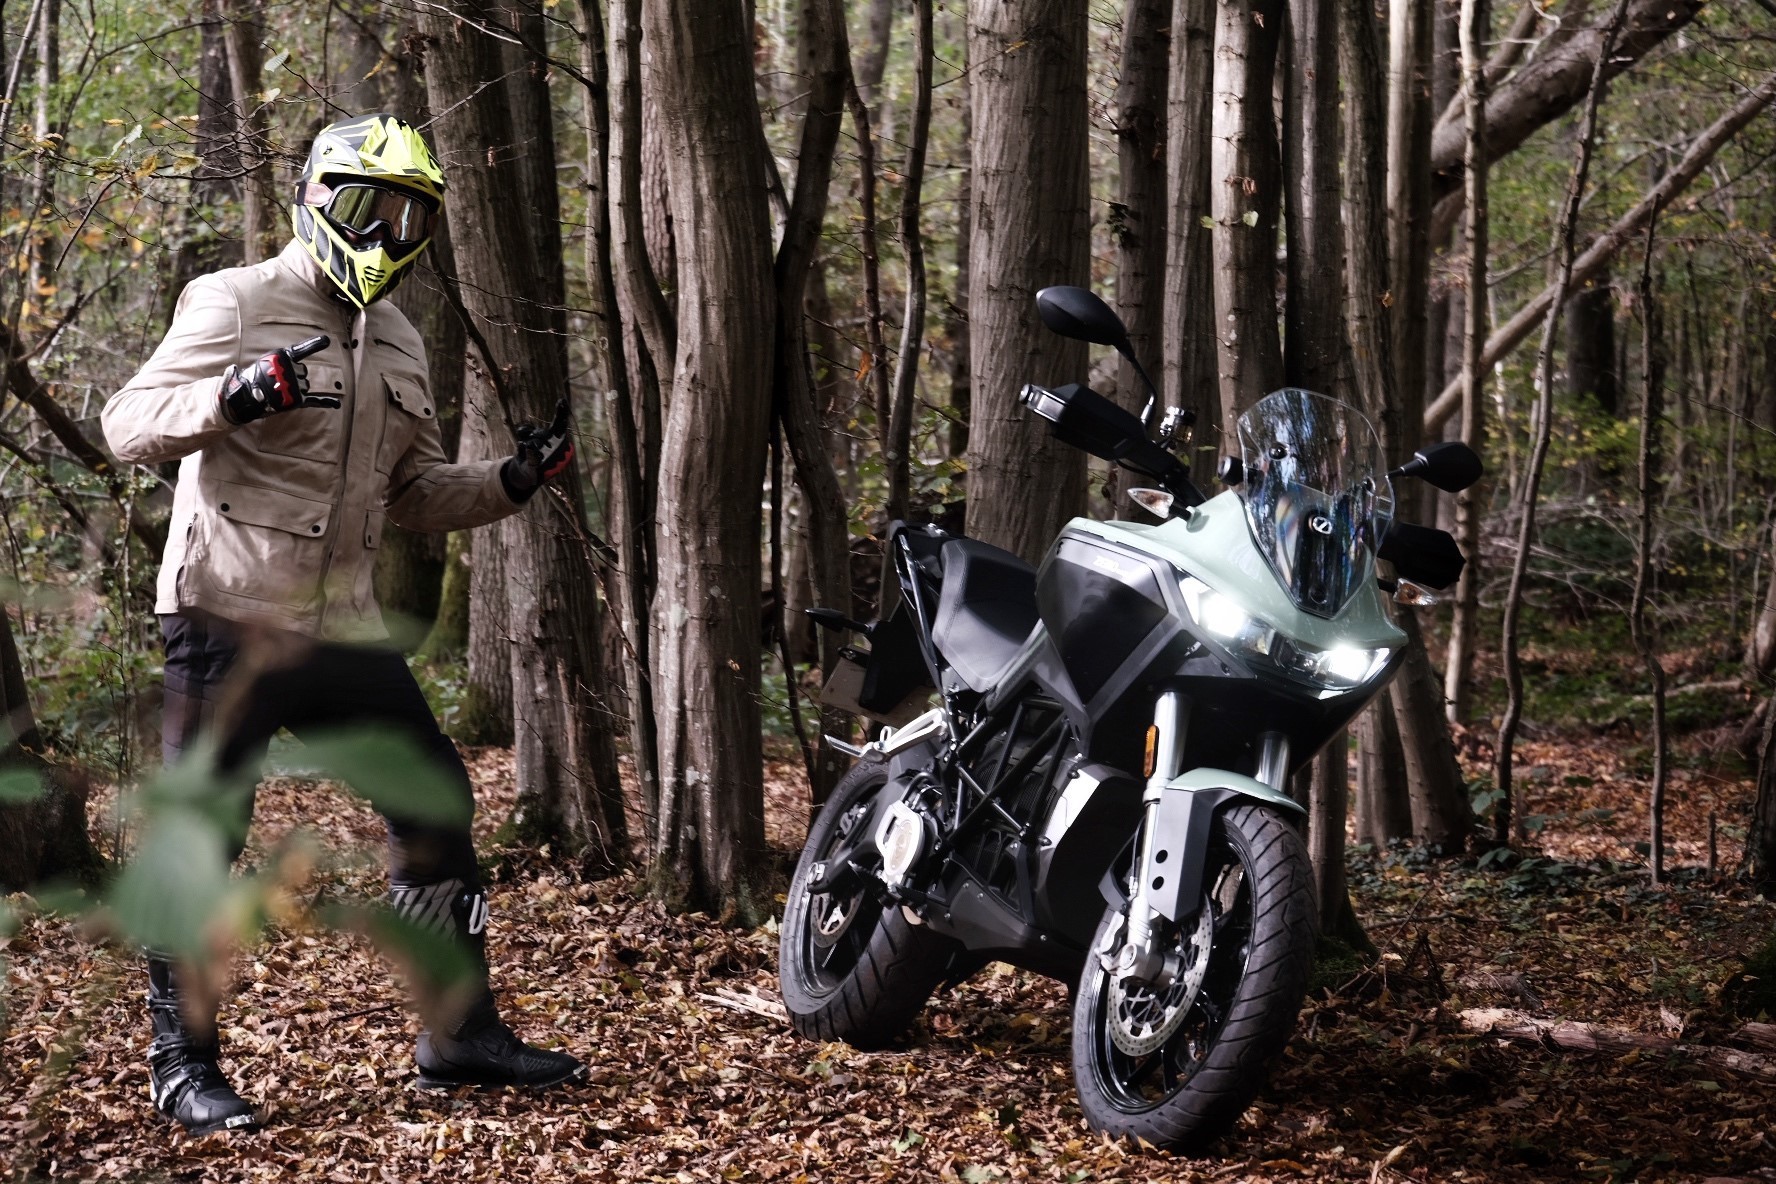 DSR/X de Zero Motorcycle, adrenalina eléctrica 'trail adventure'.... ¡Flipante!